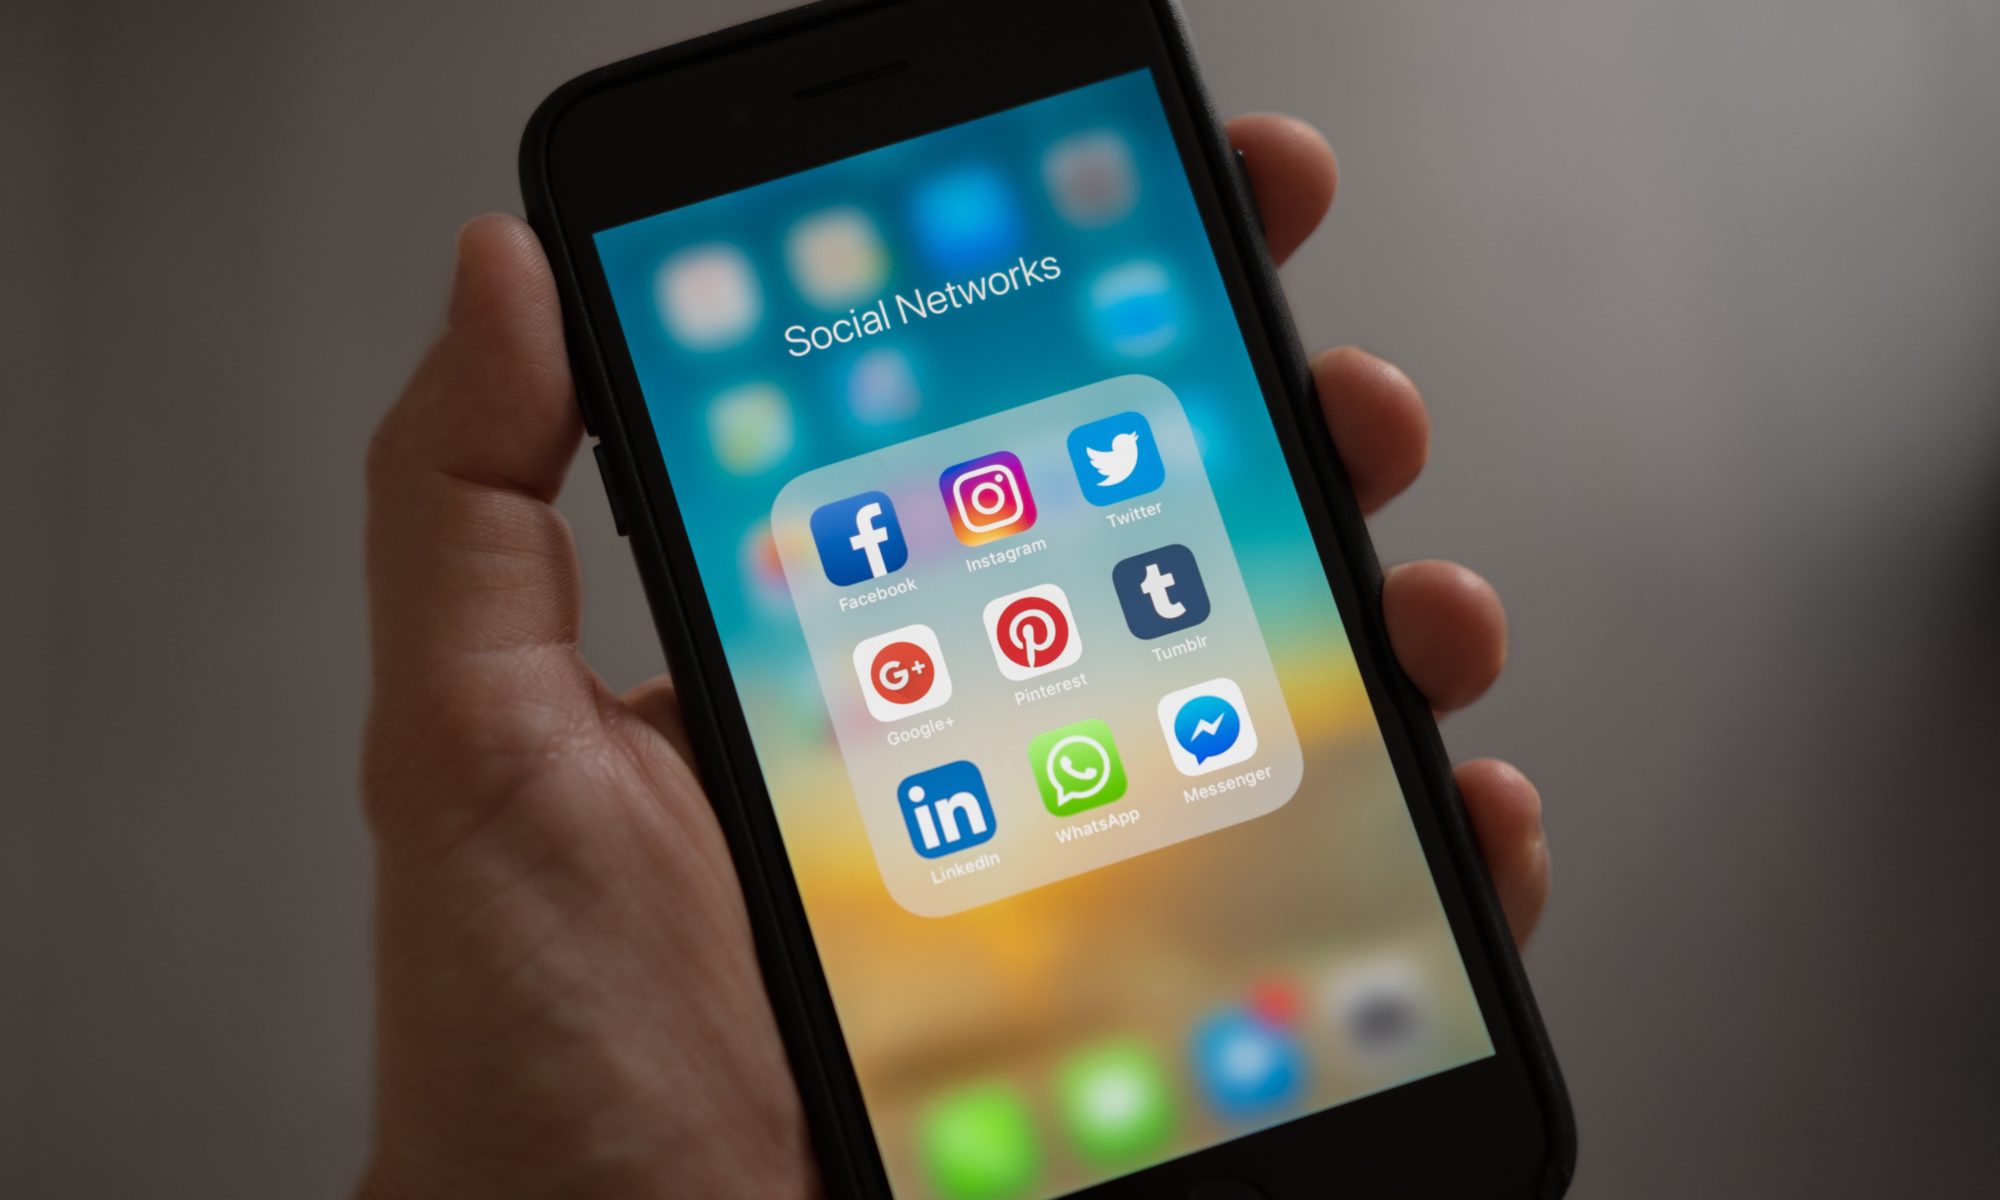 smartphone showing icons of various social media platforms - Suffolk copywriter - Suffolk copywriting